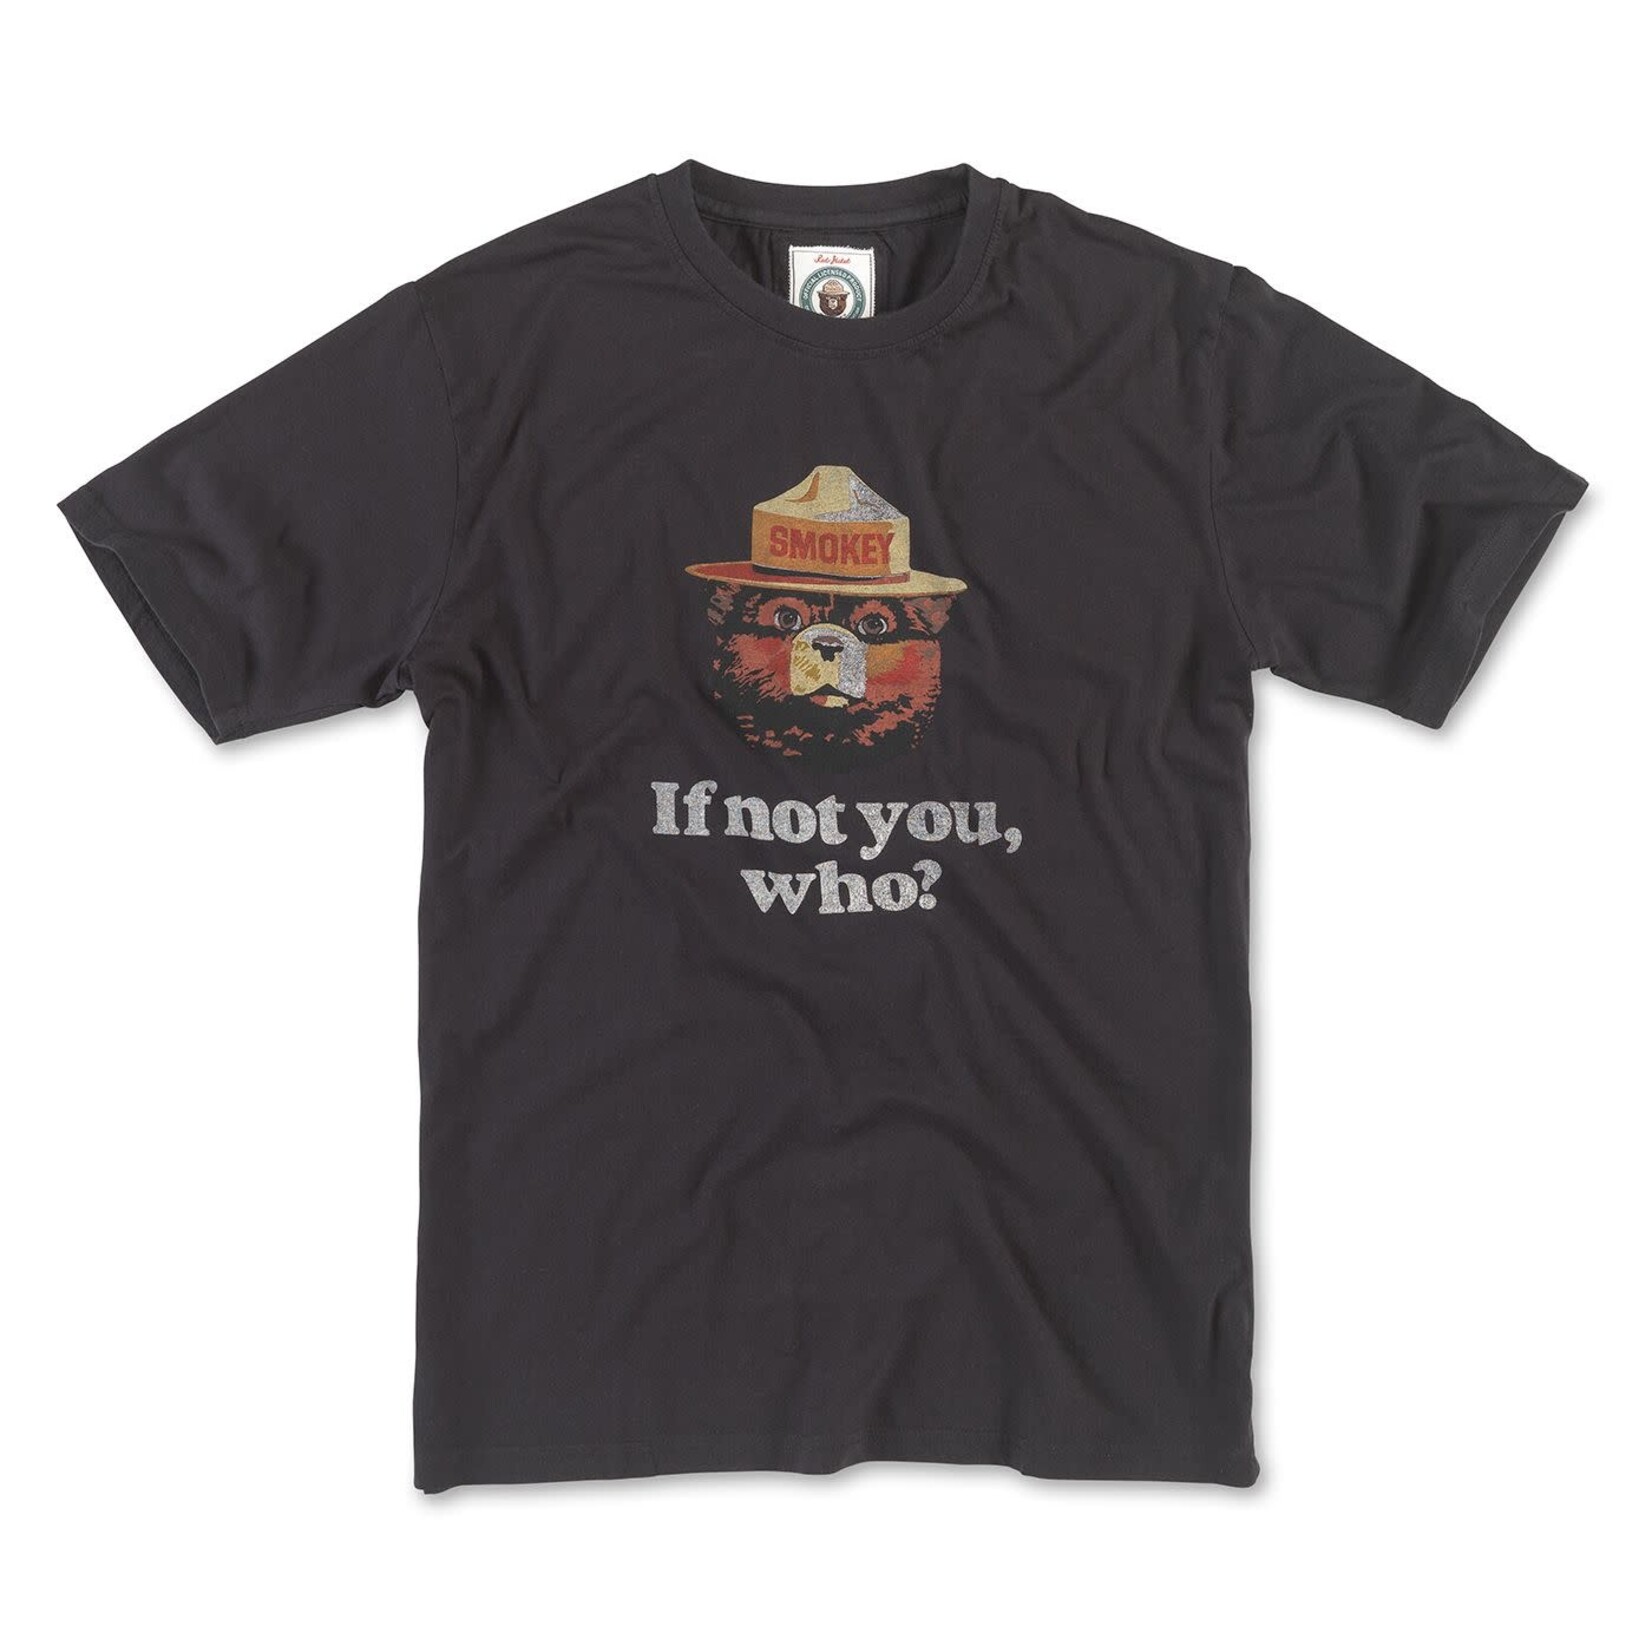 American Needle Smokey Bear T-Shirt, If Not You